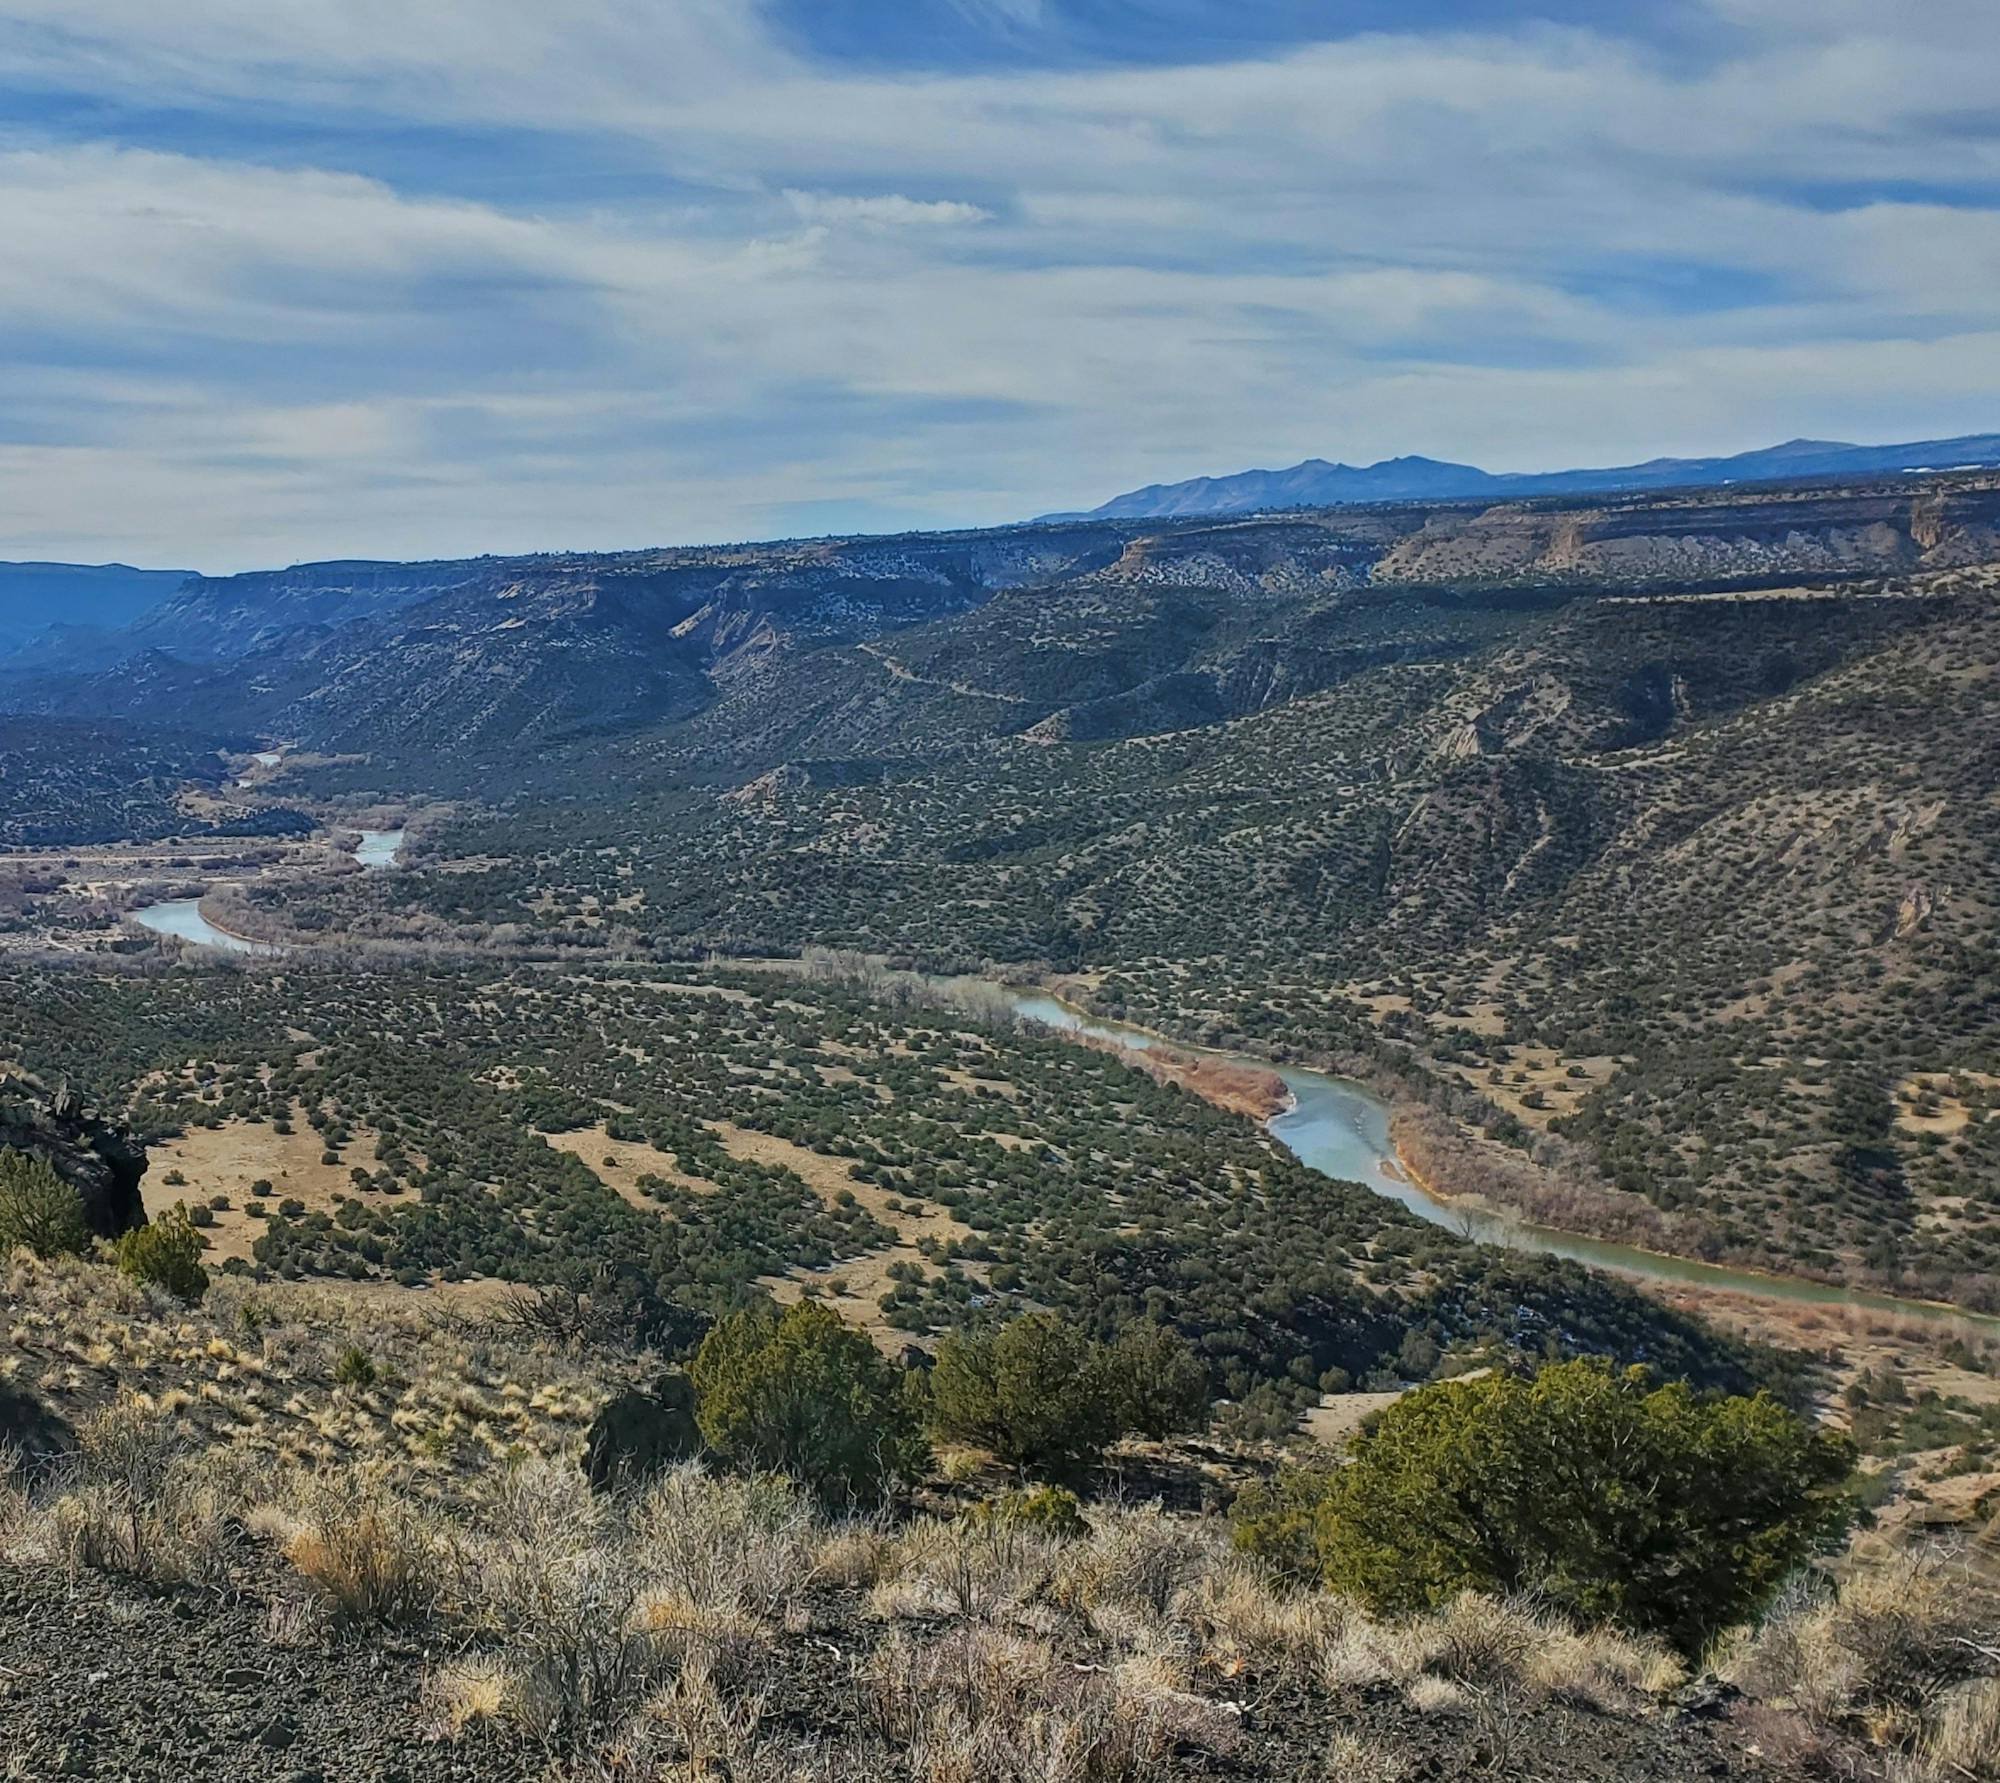 The Rio Grande Santa Fe NM